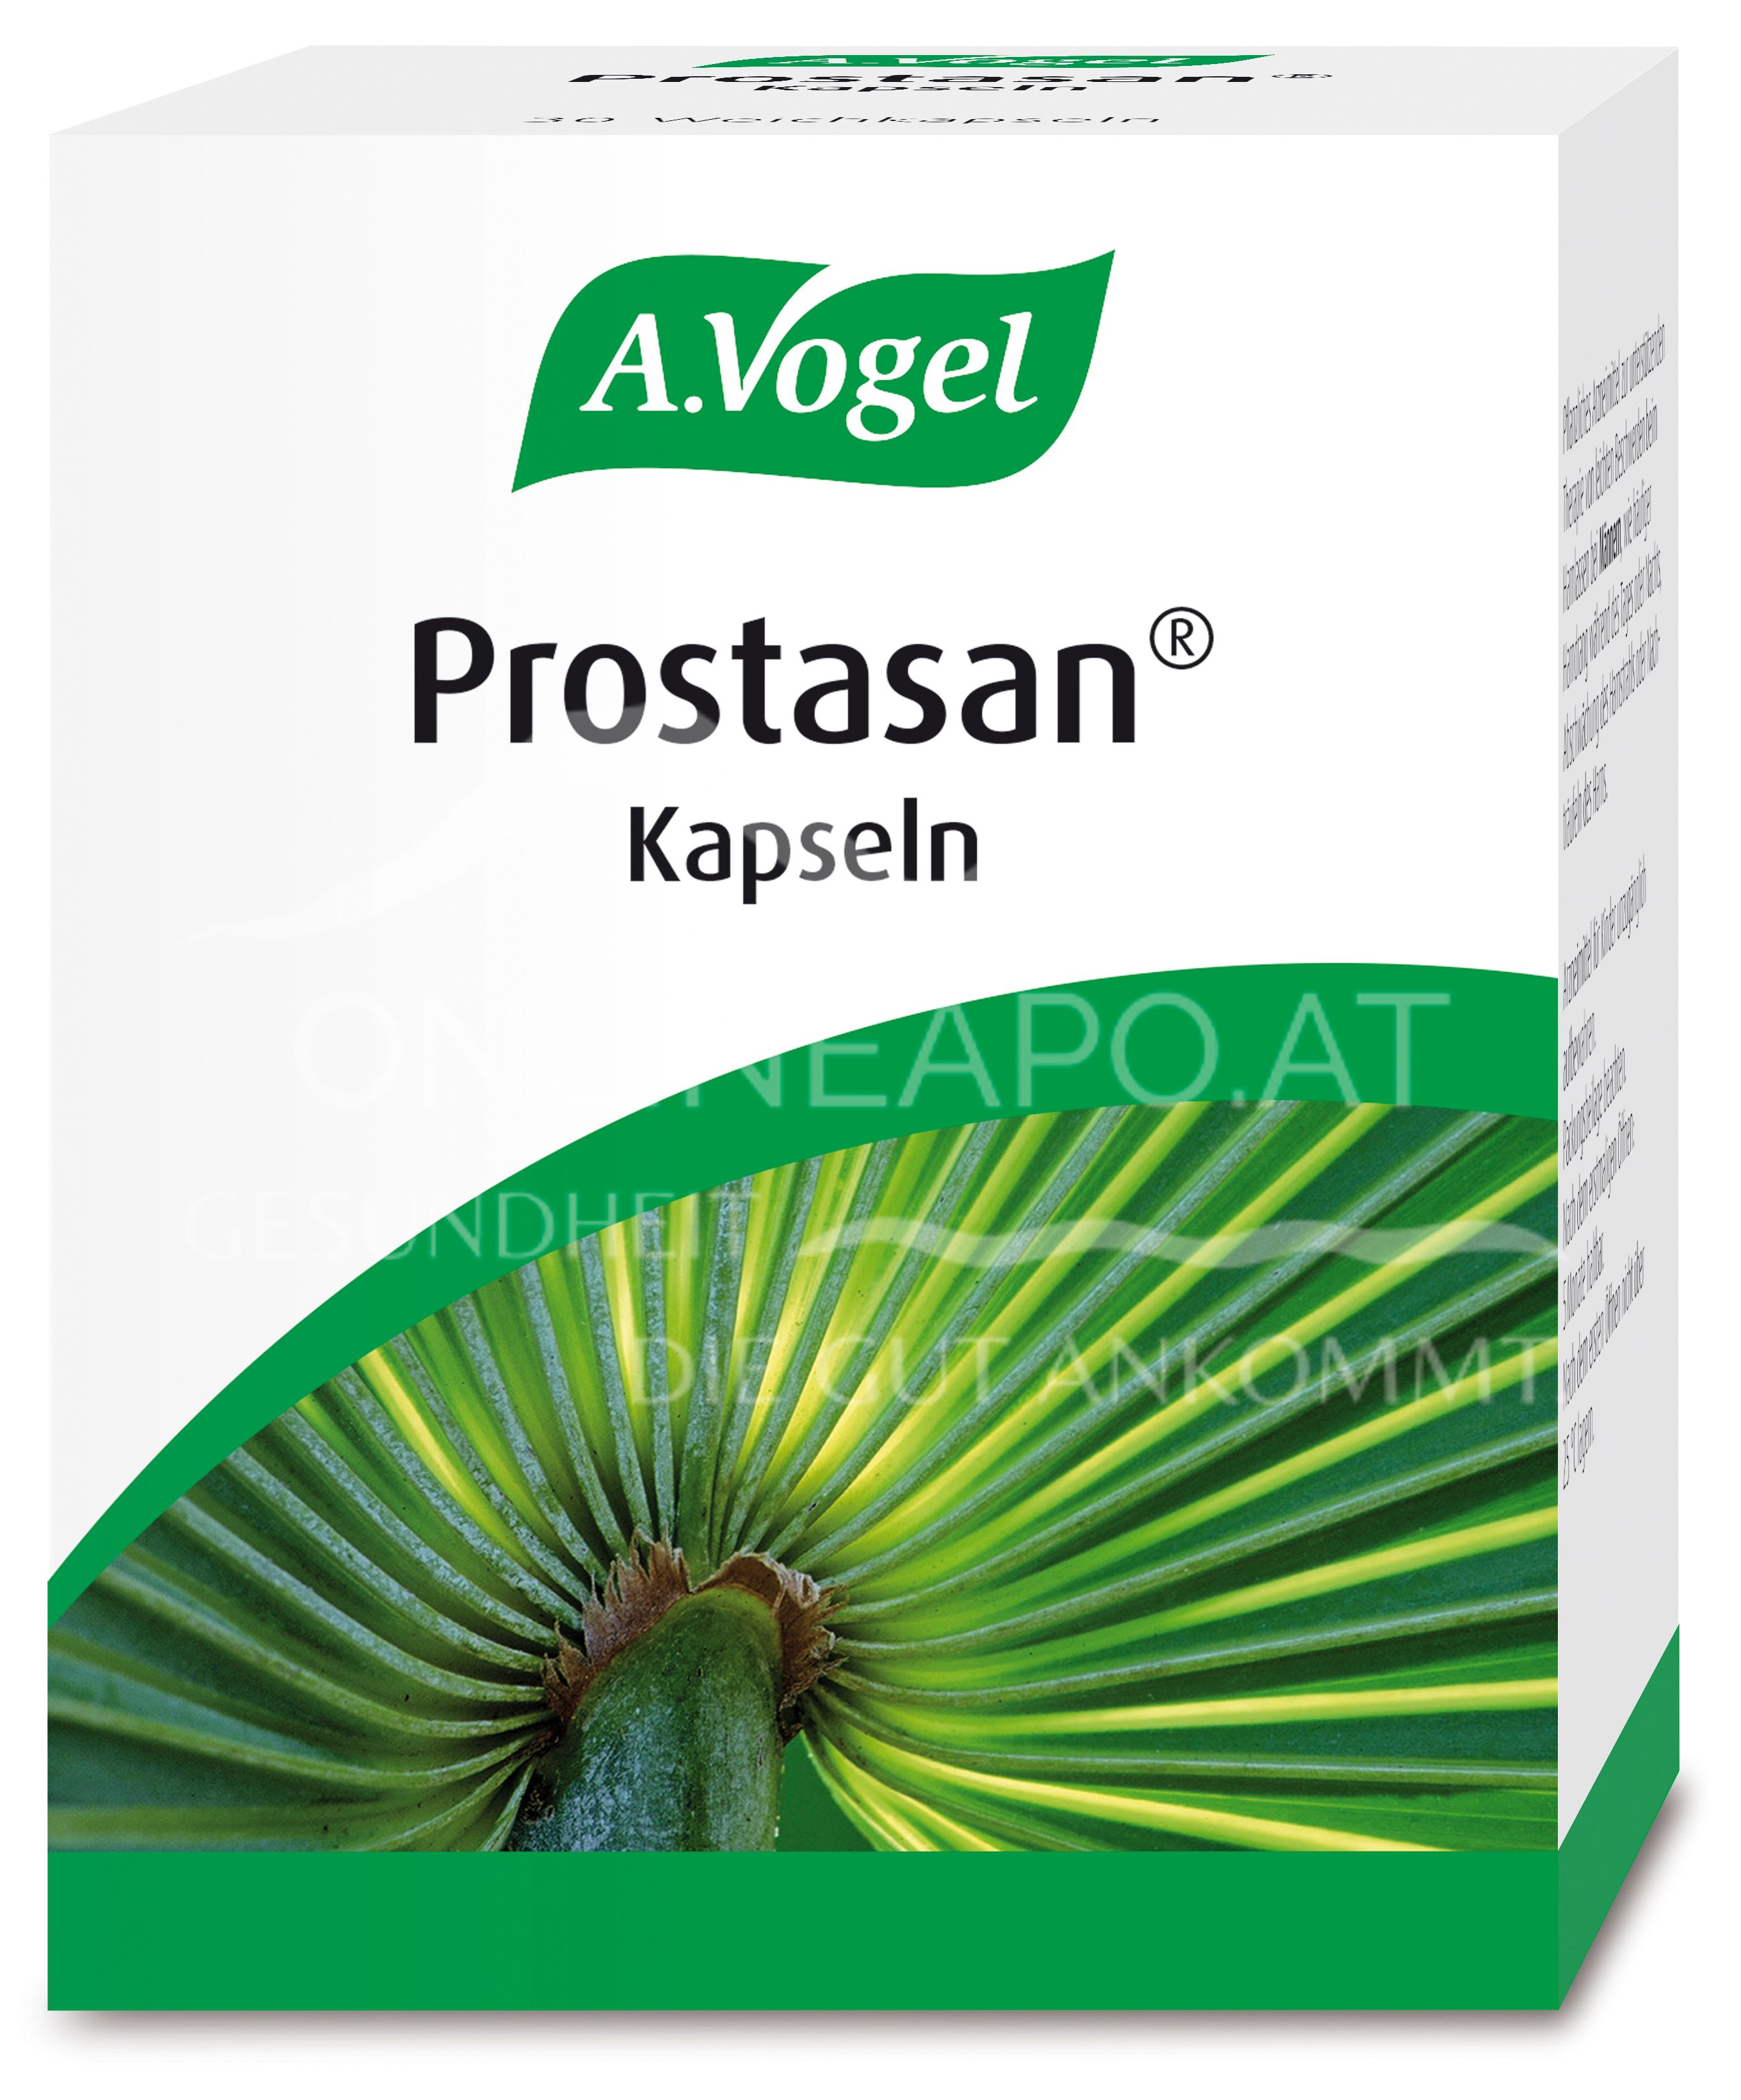 A.Vogel Prostasan Kapseln